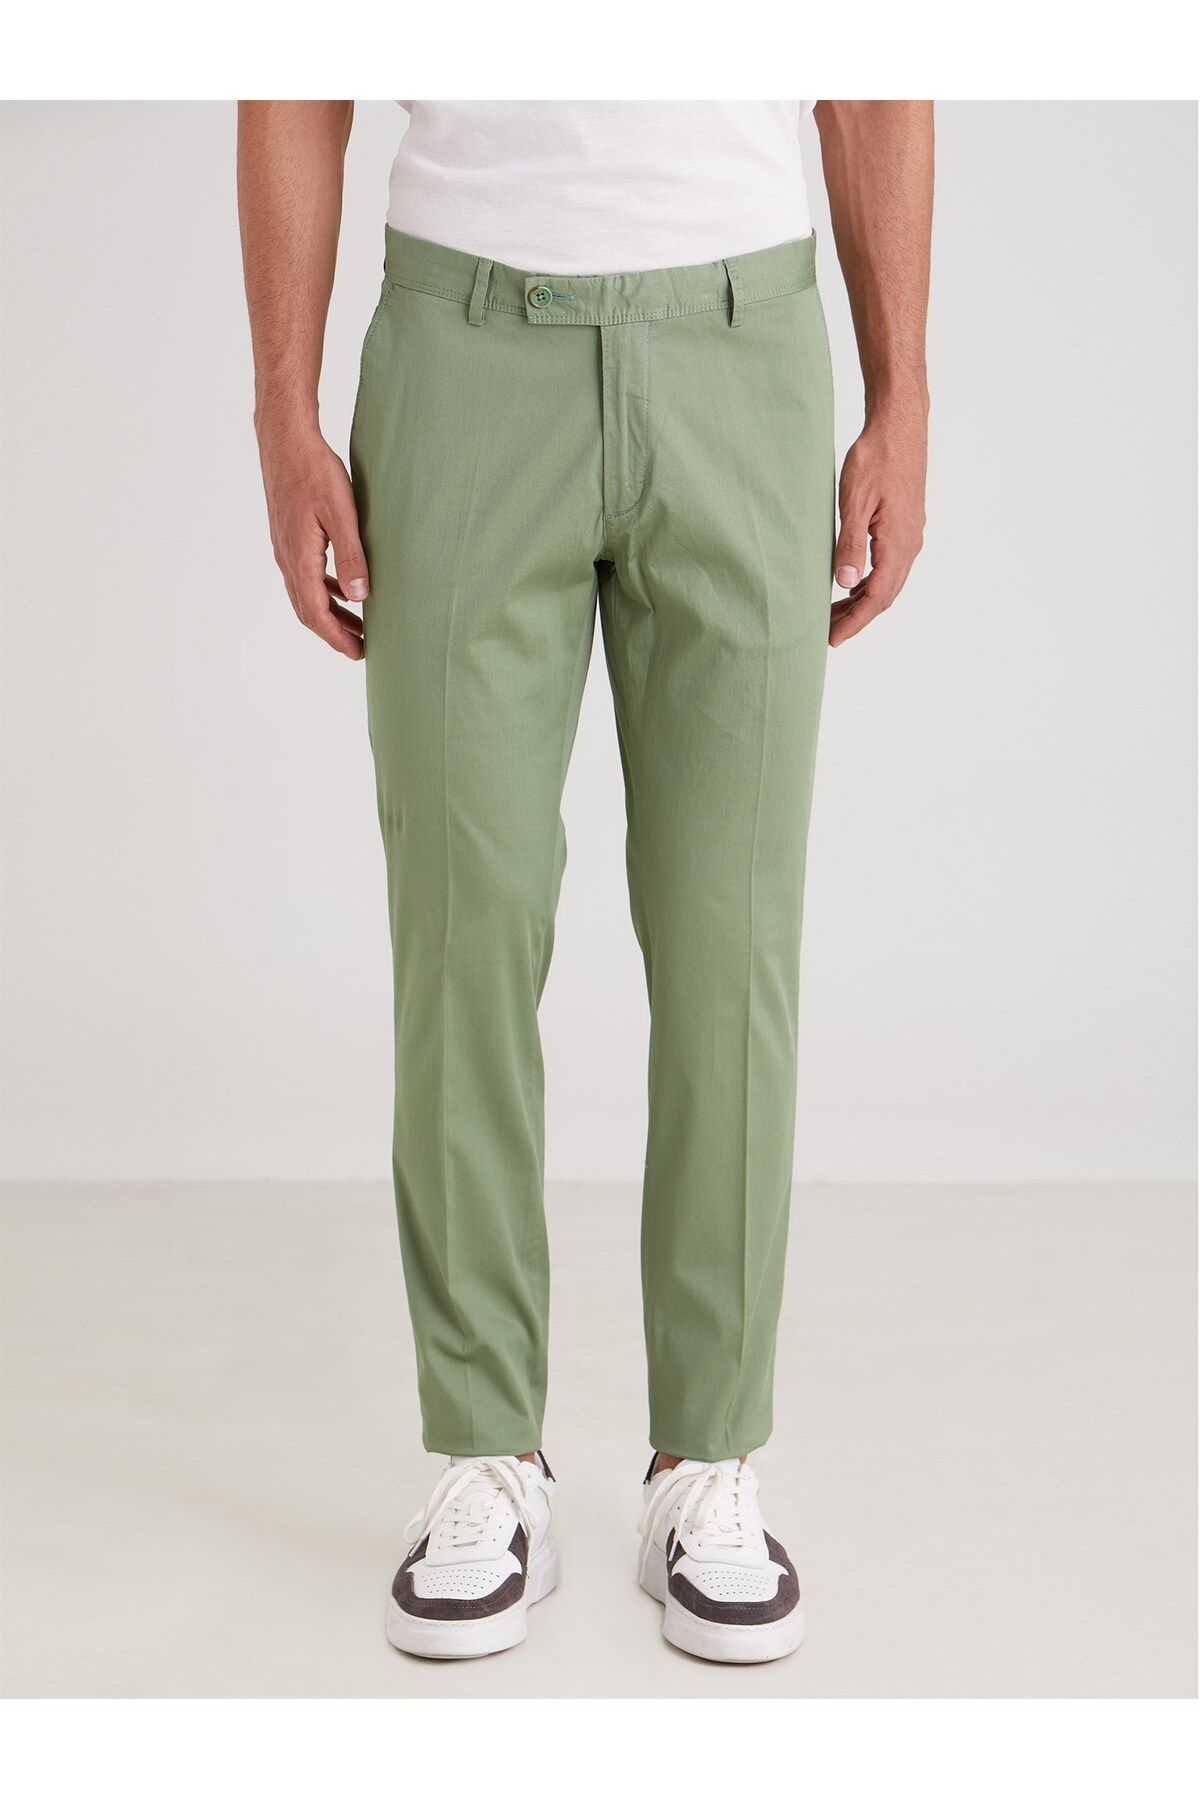 Dufy Yeşil Erkek Slim Fit Düz Kanvas Pantolon - 29599